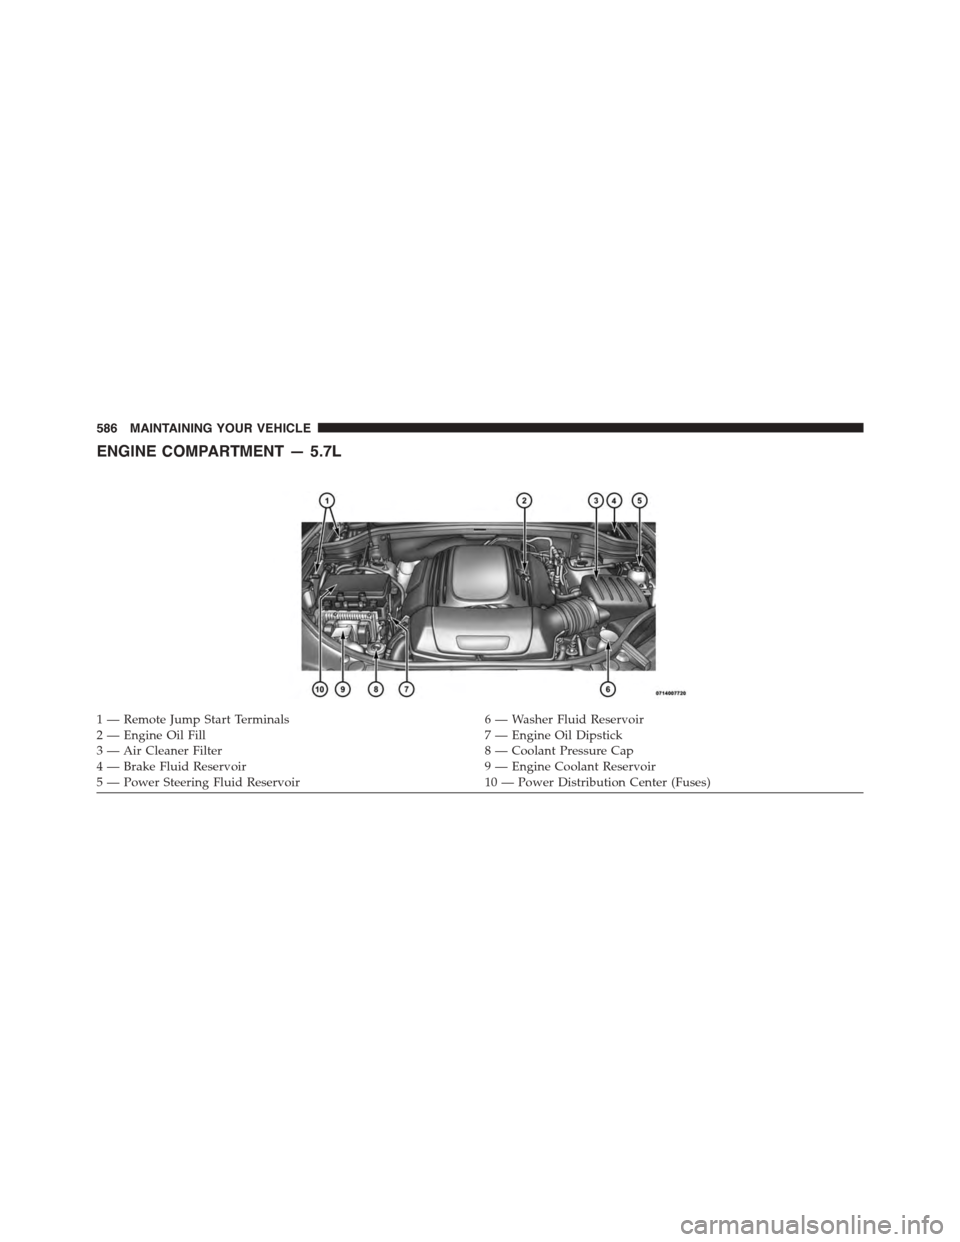 DODGE DURANGO 2015 3.G Owners Manual ENGINE COMPARTMENT — 5.7L
1 — Remote Jump Start Terminals6 — Washer Fluid Reservoir2—EngineOilFill7—EngineOilDipstick3 — Air Cleaner Filter8 — Coolant Pressure Cap4—BrakeFluidReservoir